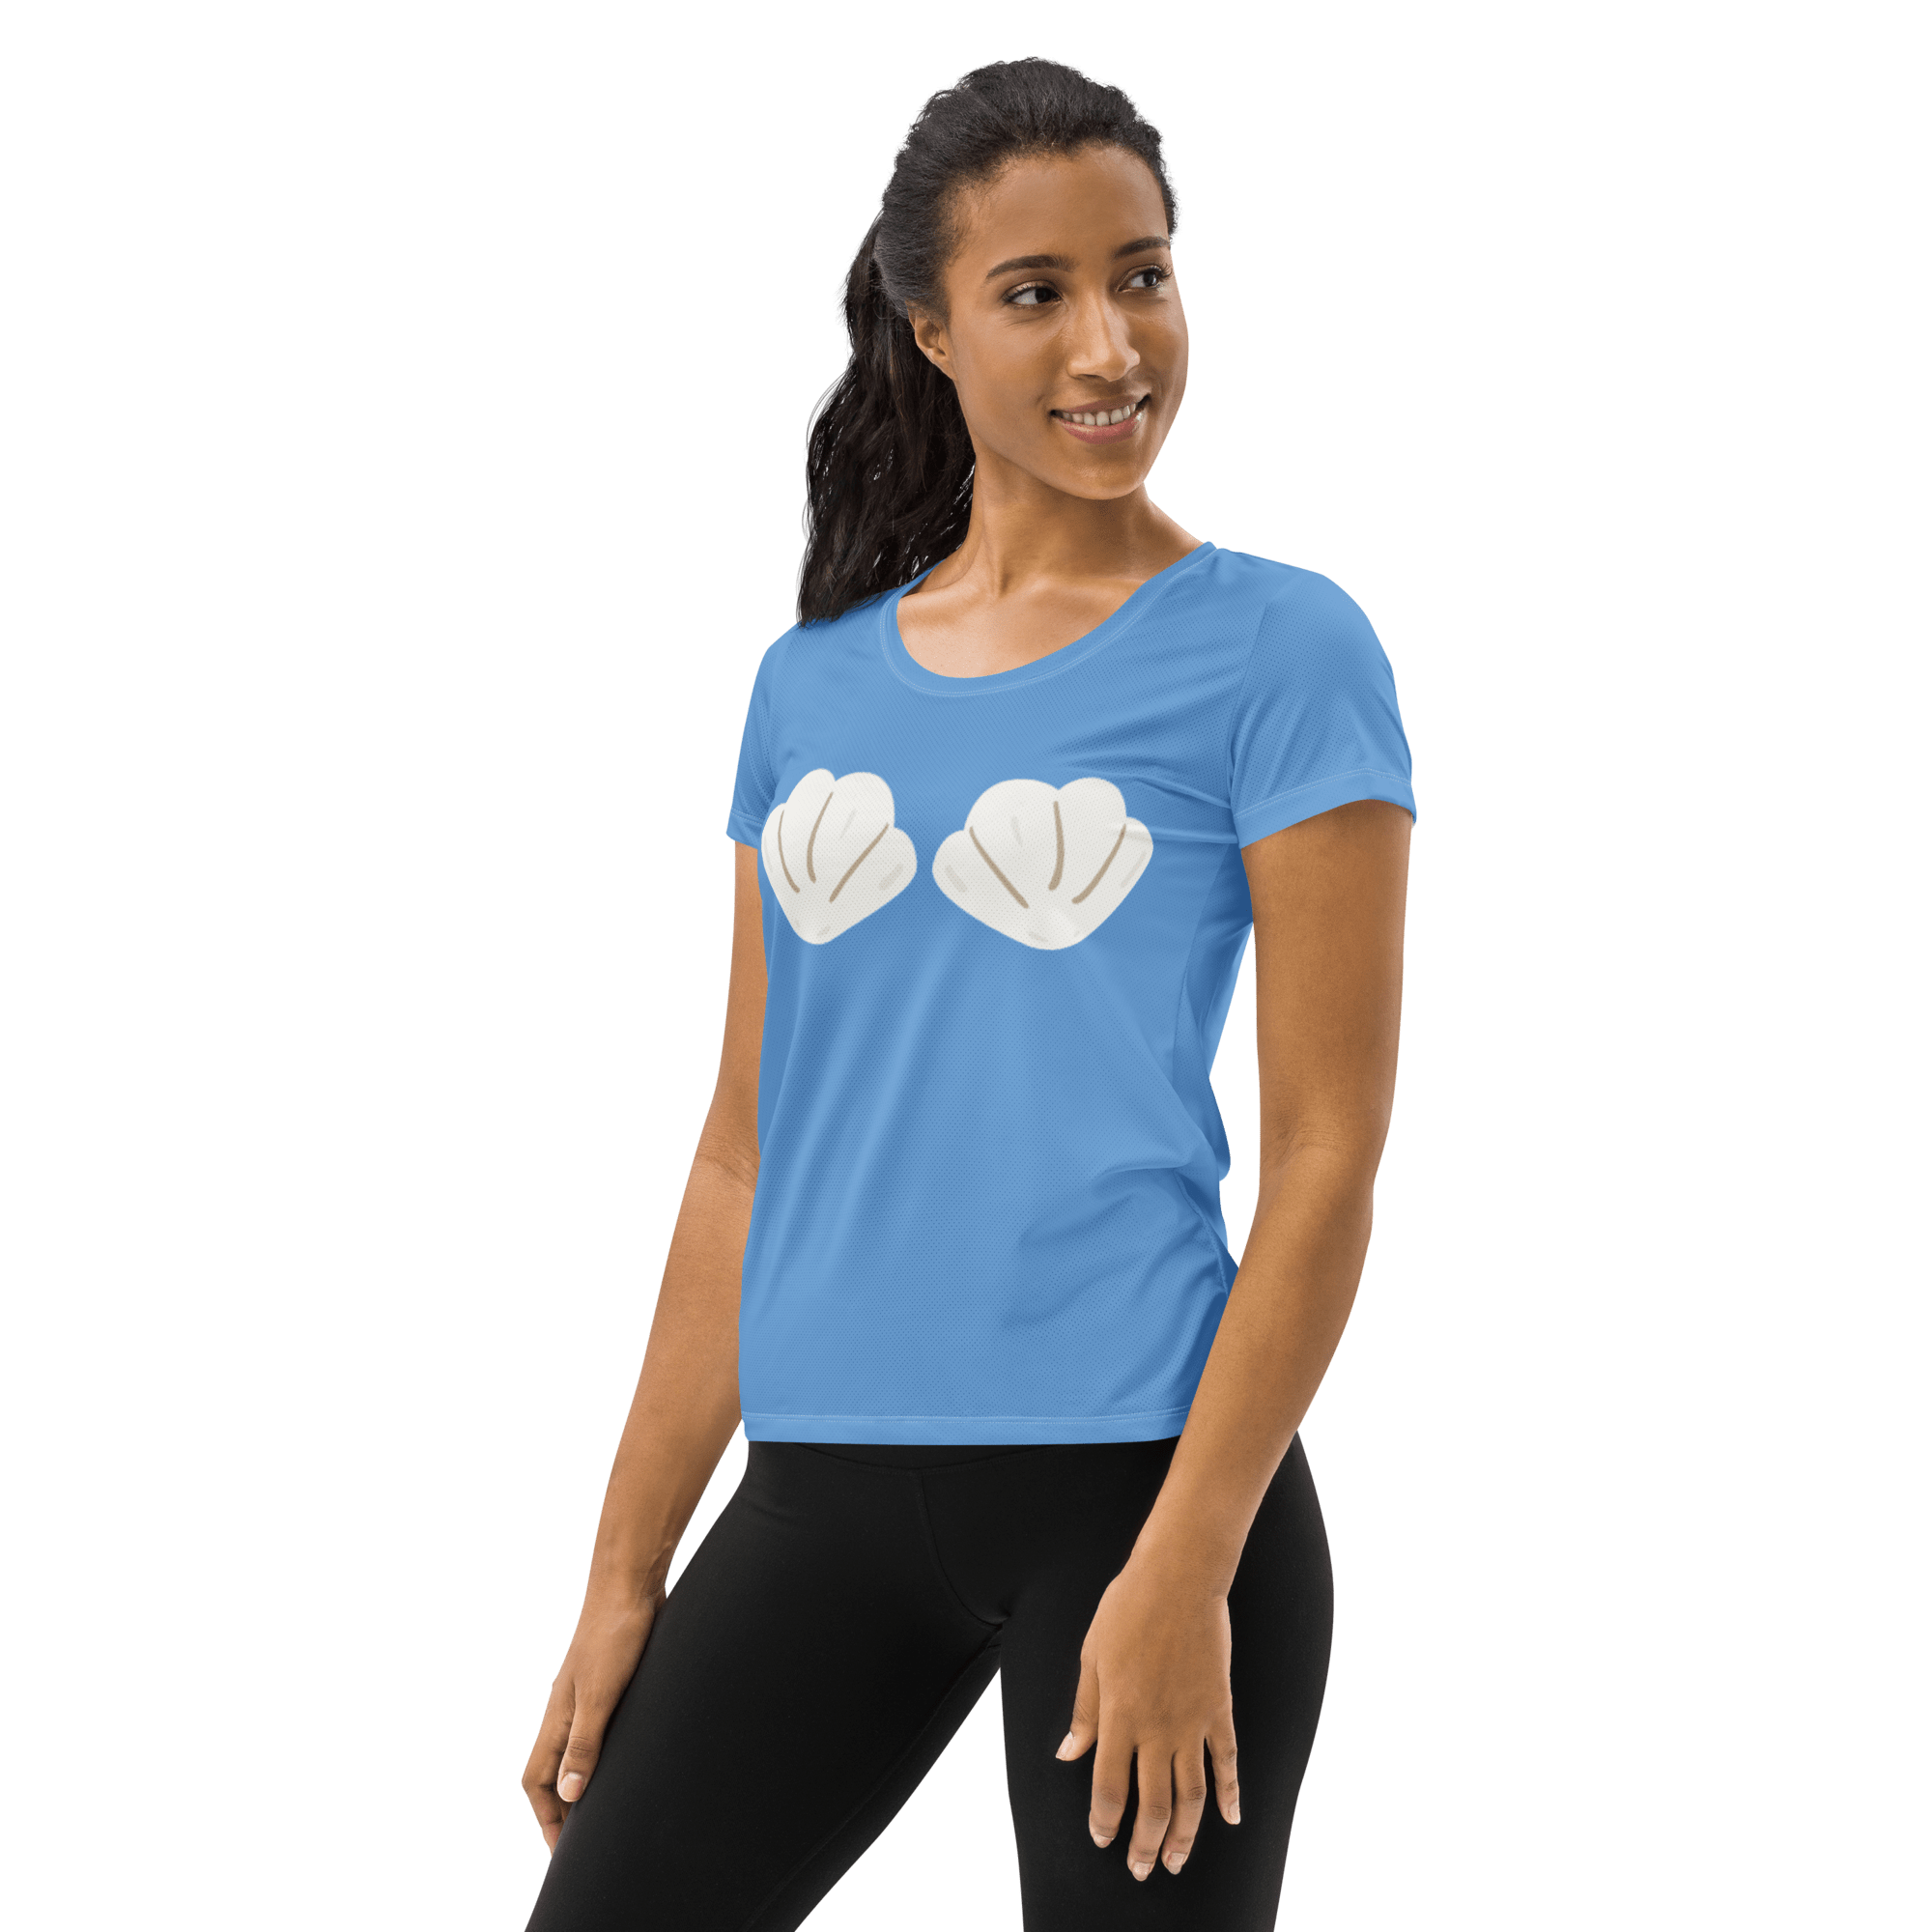 Mermaid Women's Workout Shirt Activewear Jolly & Goode